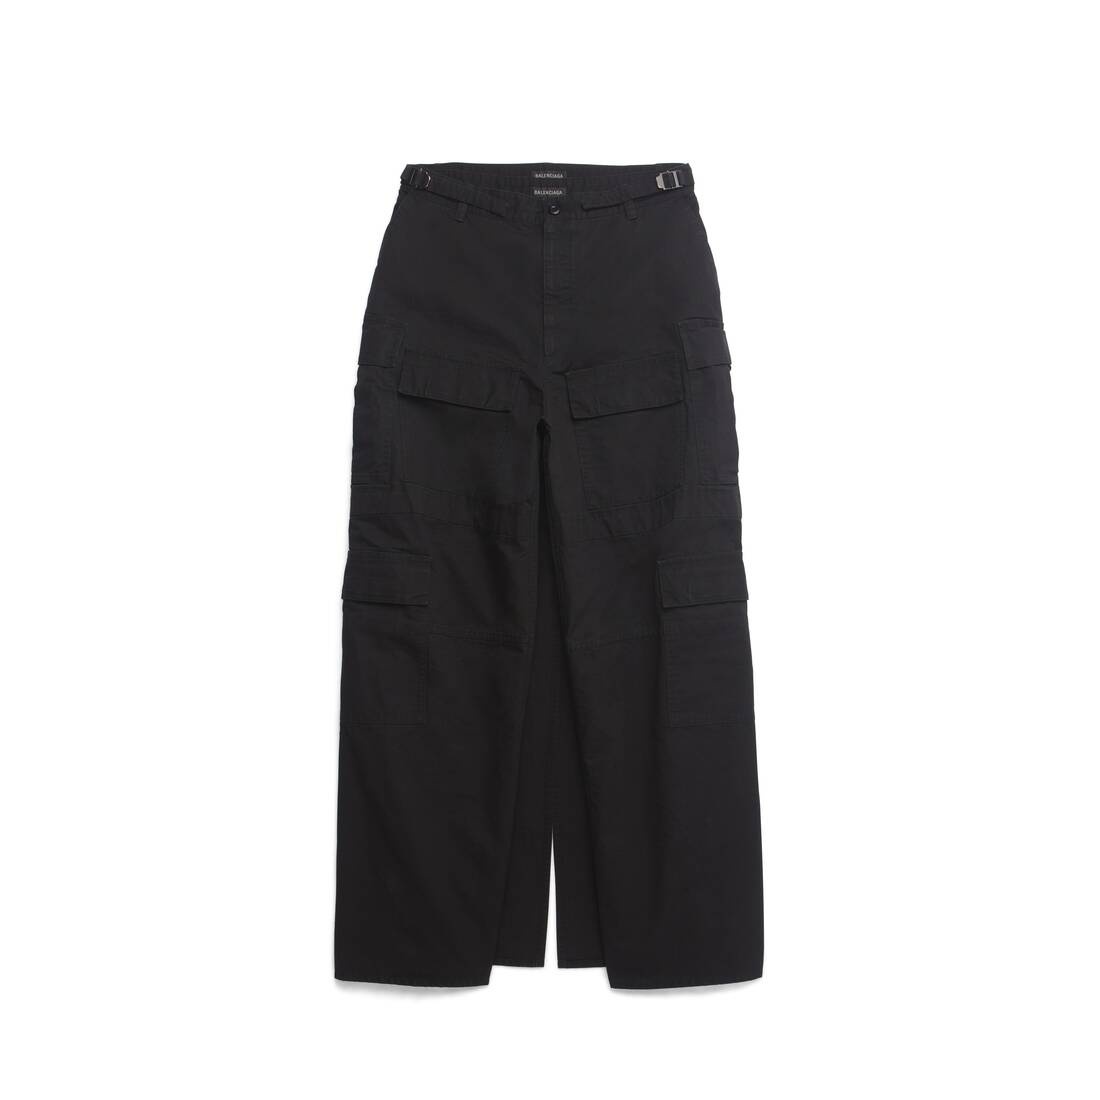 Women's Apron Cargo Pants Skirt in Black - 1